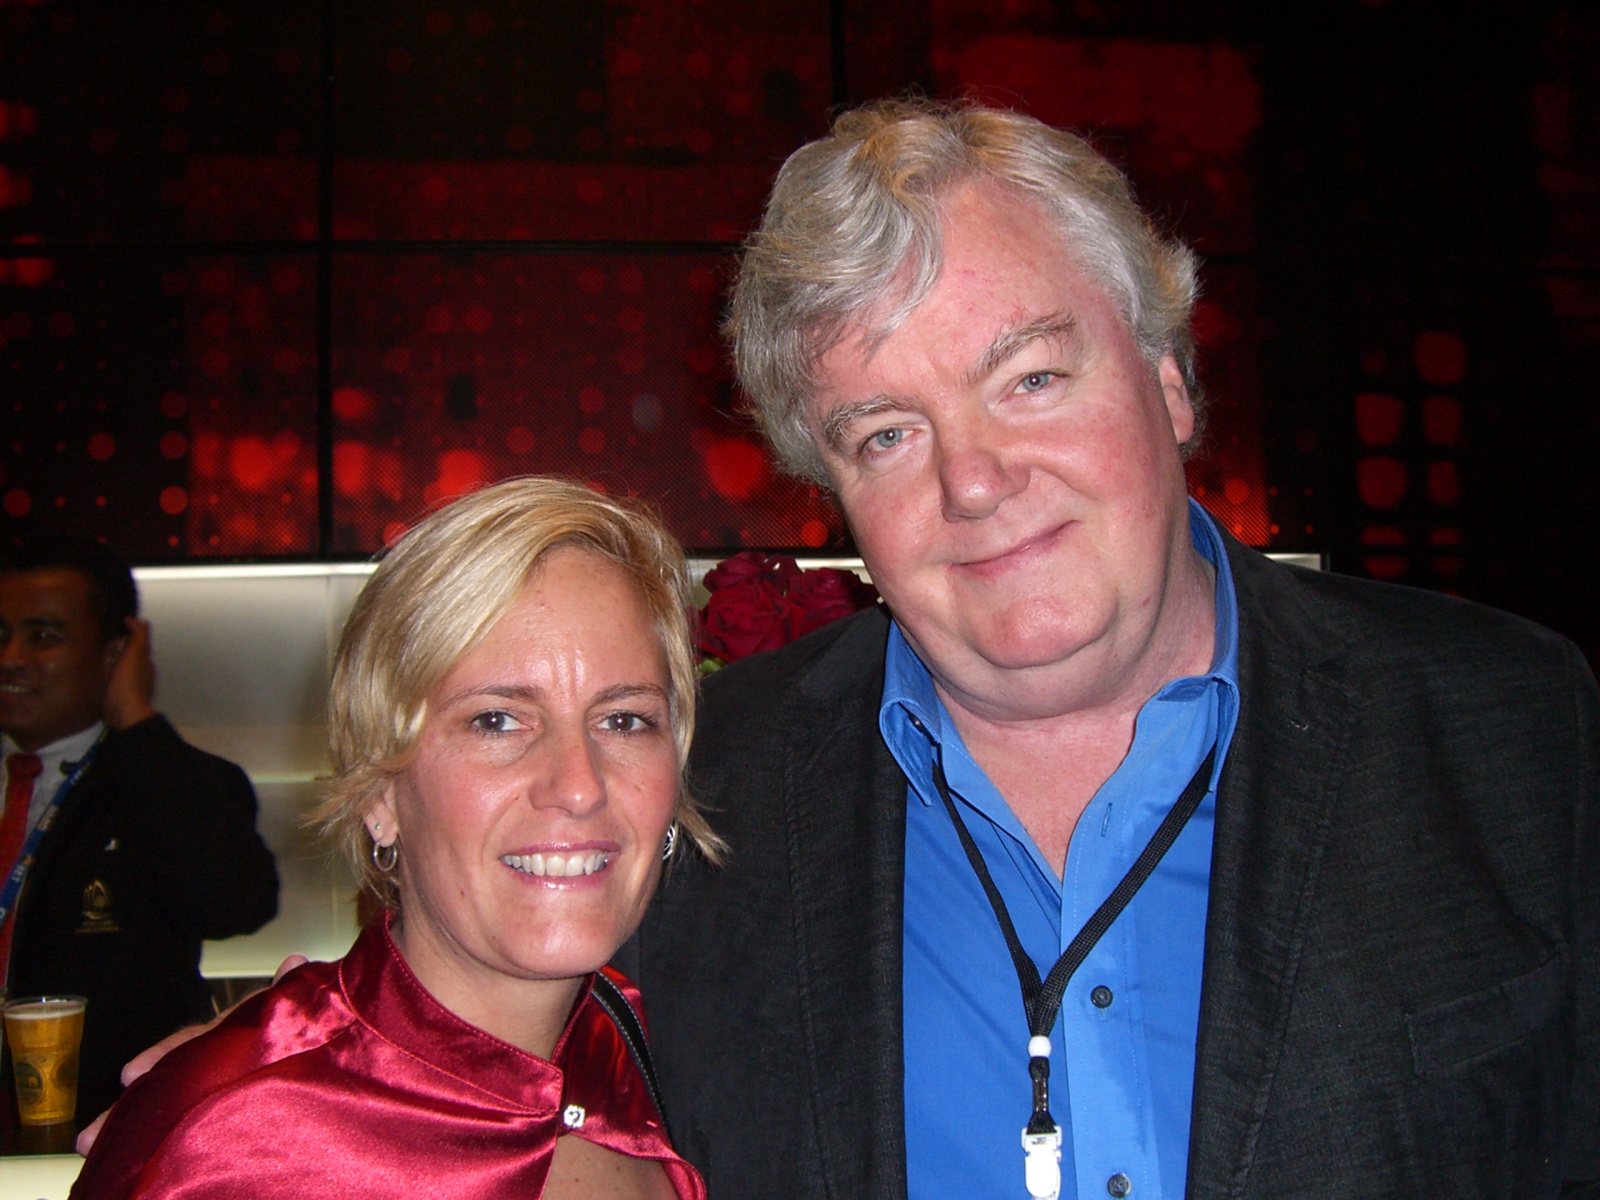 Lisa Stoll and Iain Smith OBE at the 2008 Bangkok International Film Festival.